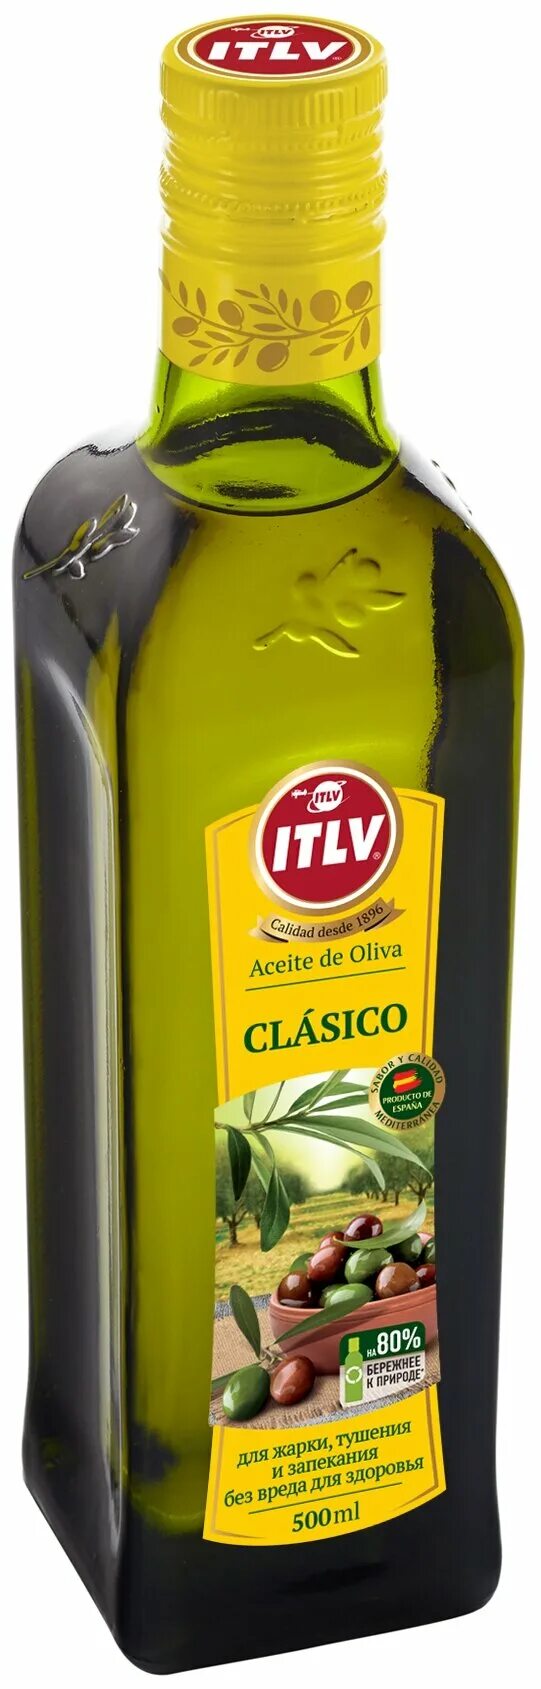 Оливковое масло ITLV Extra Virgen 500мл. Масло оливковое 100% ITLV 500мл.. Оливковое масло ITLV clasico 500мл. Масло оливковое ITLV 100% clasico, 1,0 л. Сорта оливкового масла